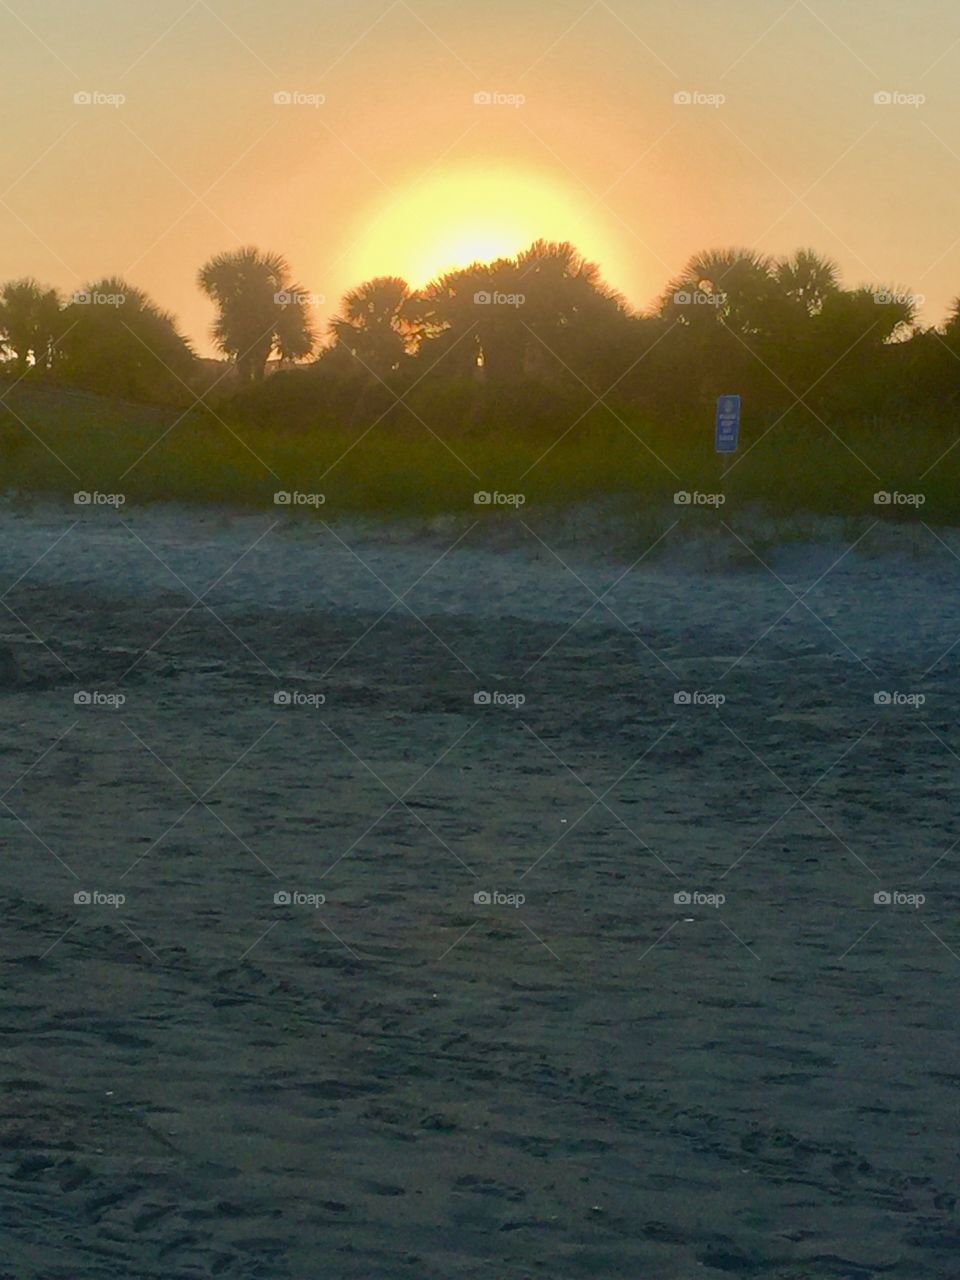 Sunset in Myrtle Beach, So. Carolina!